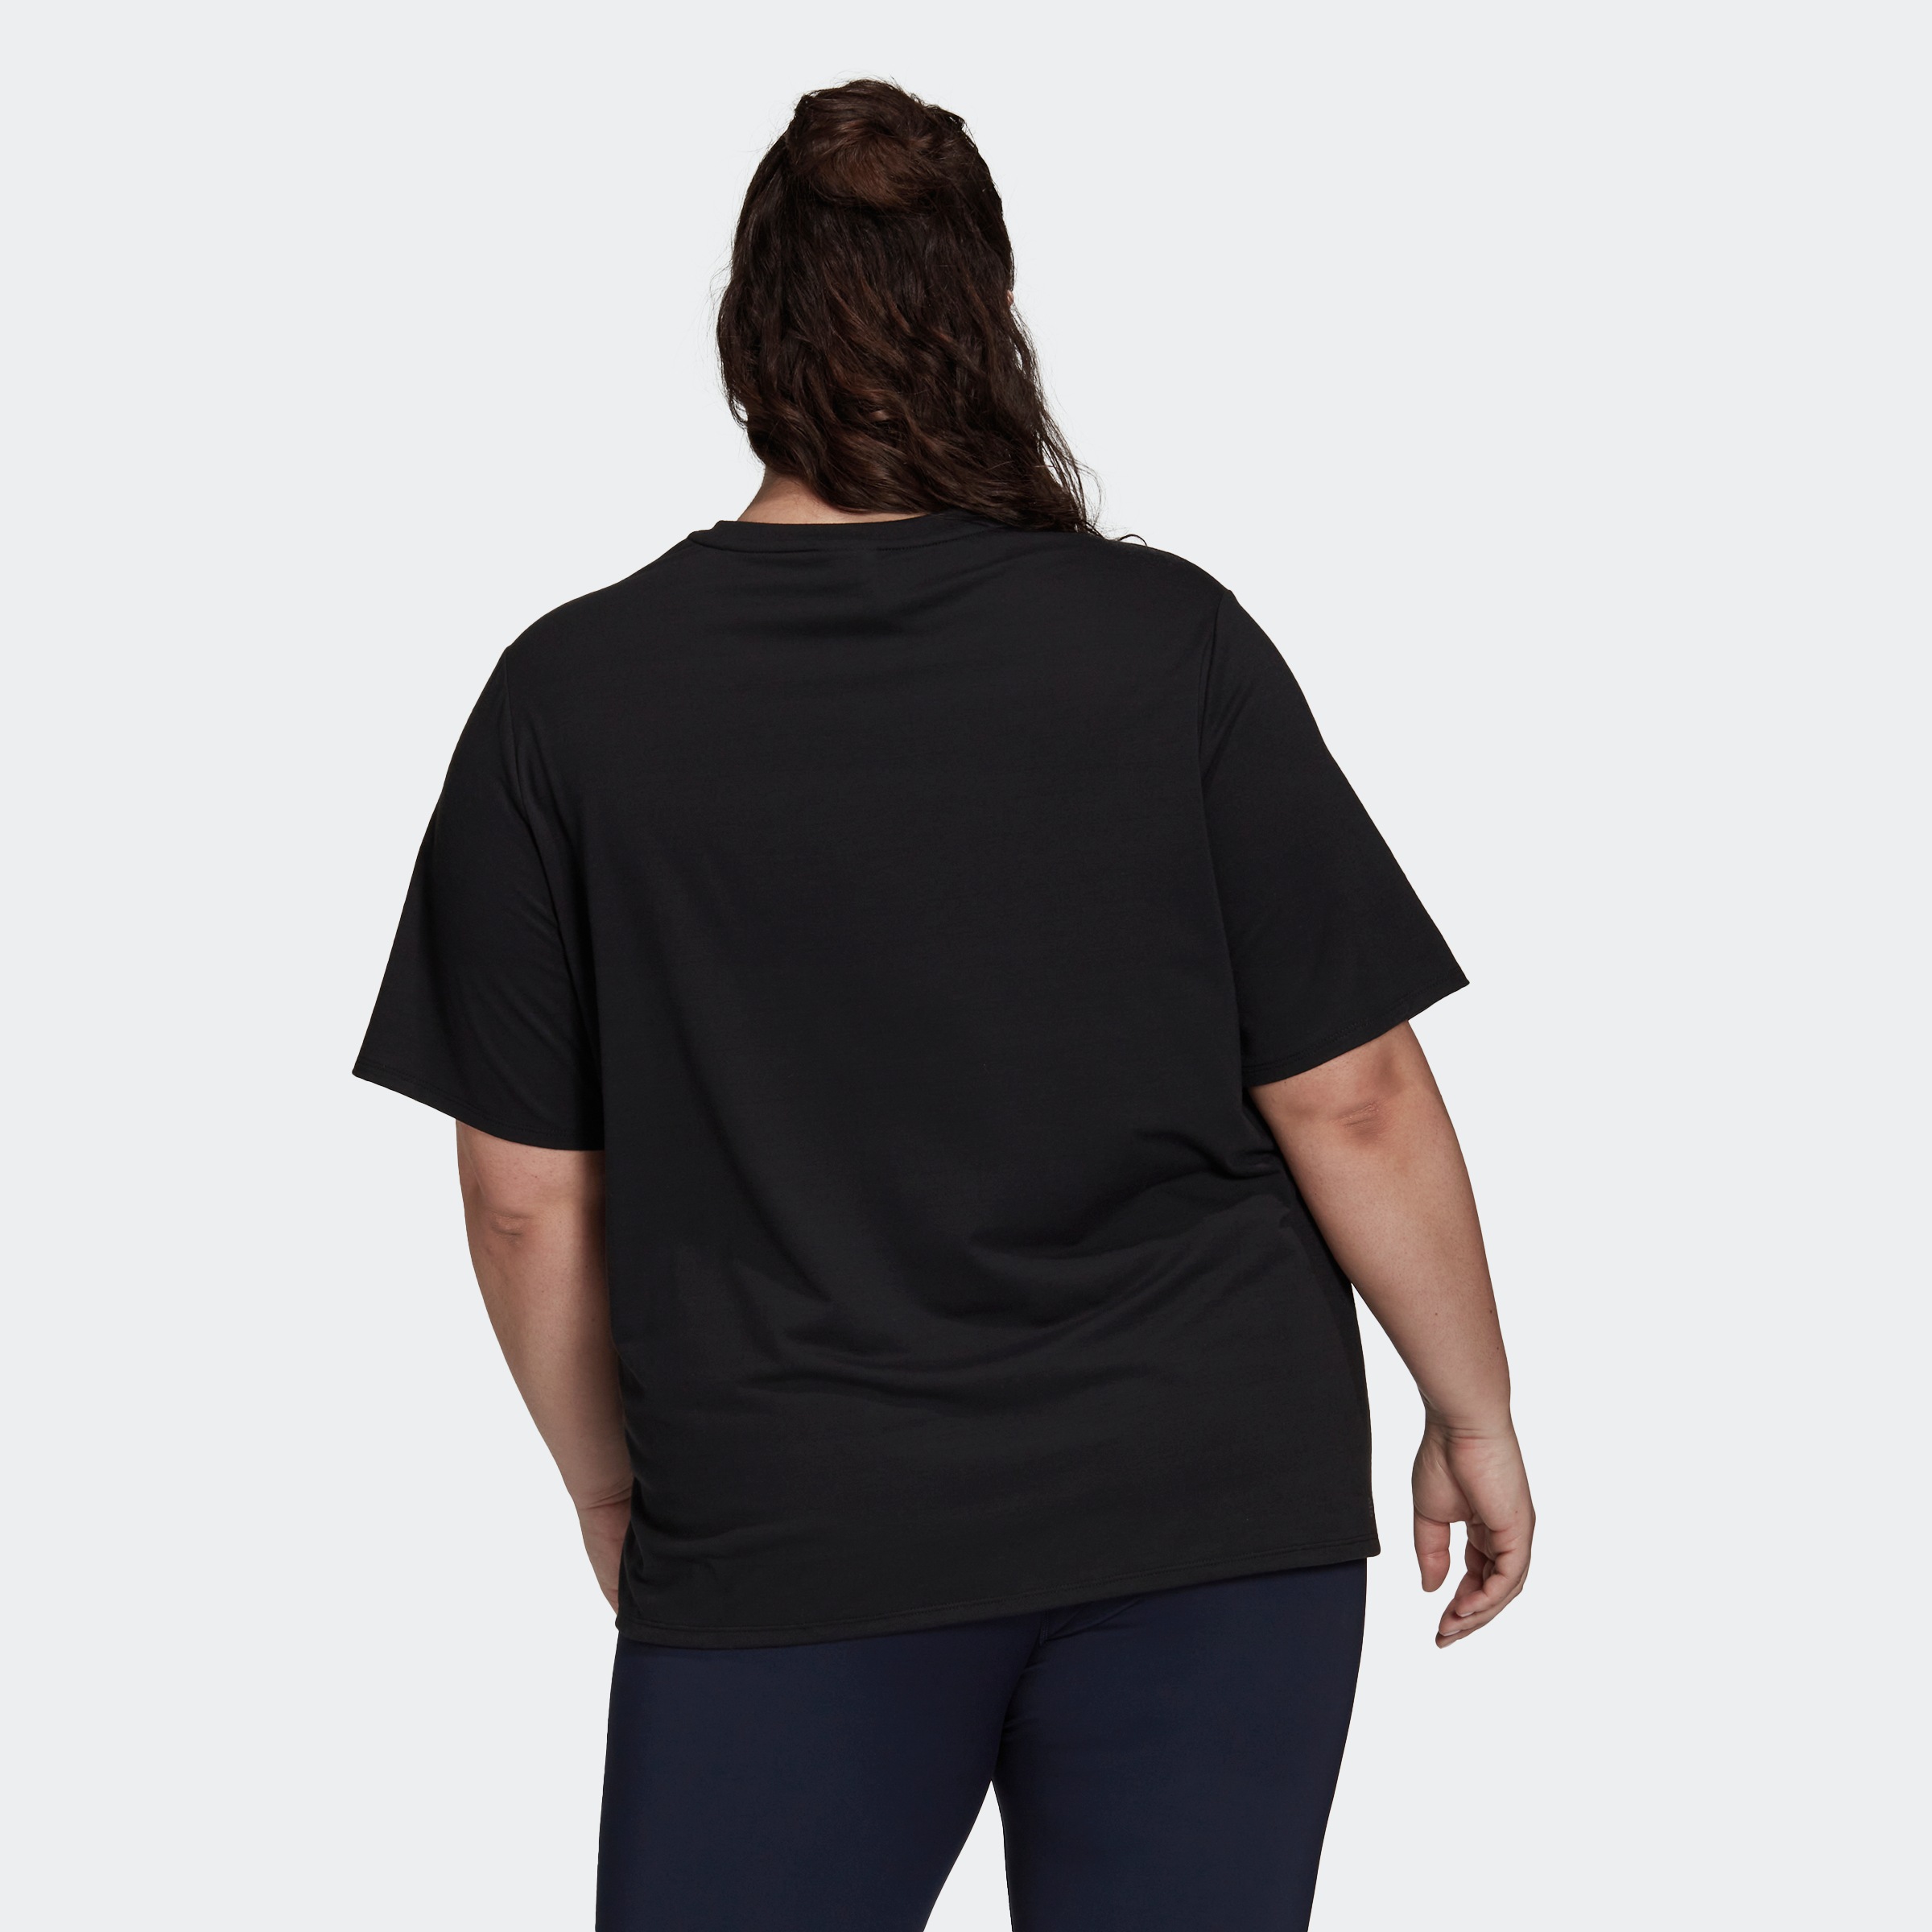 GROSSE GRÖSSEN« ICONS Performance »TRAIN adidas T-Shirt – shoppen 3-STREIFEN